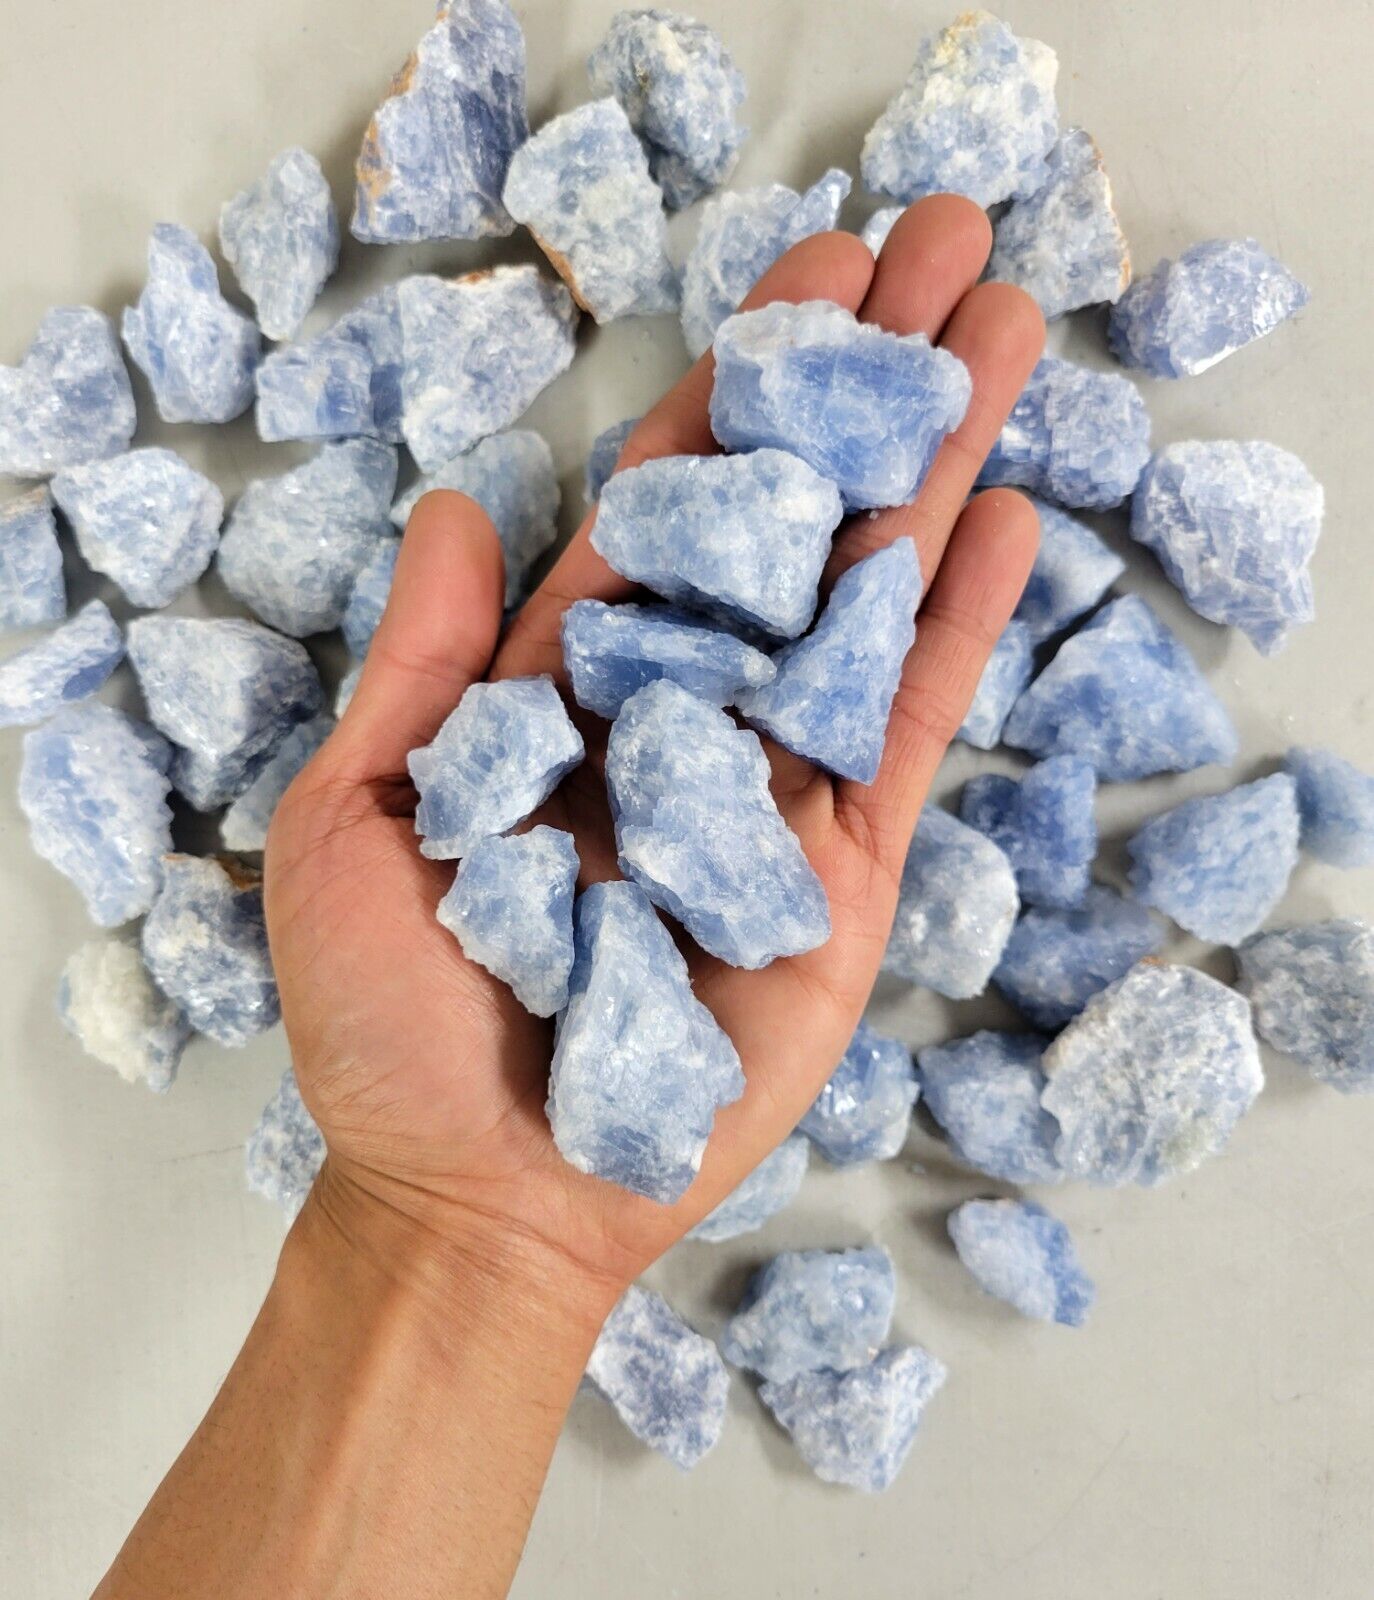 Blue Calcite Crystals - Raw Rough Gemstones Bulk - Natural Rough Stones Healing